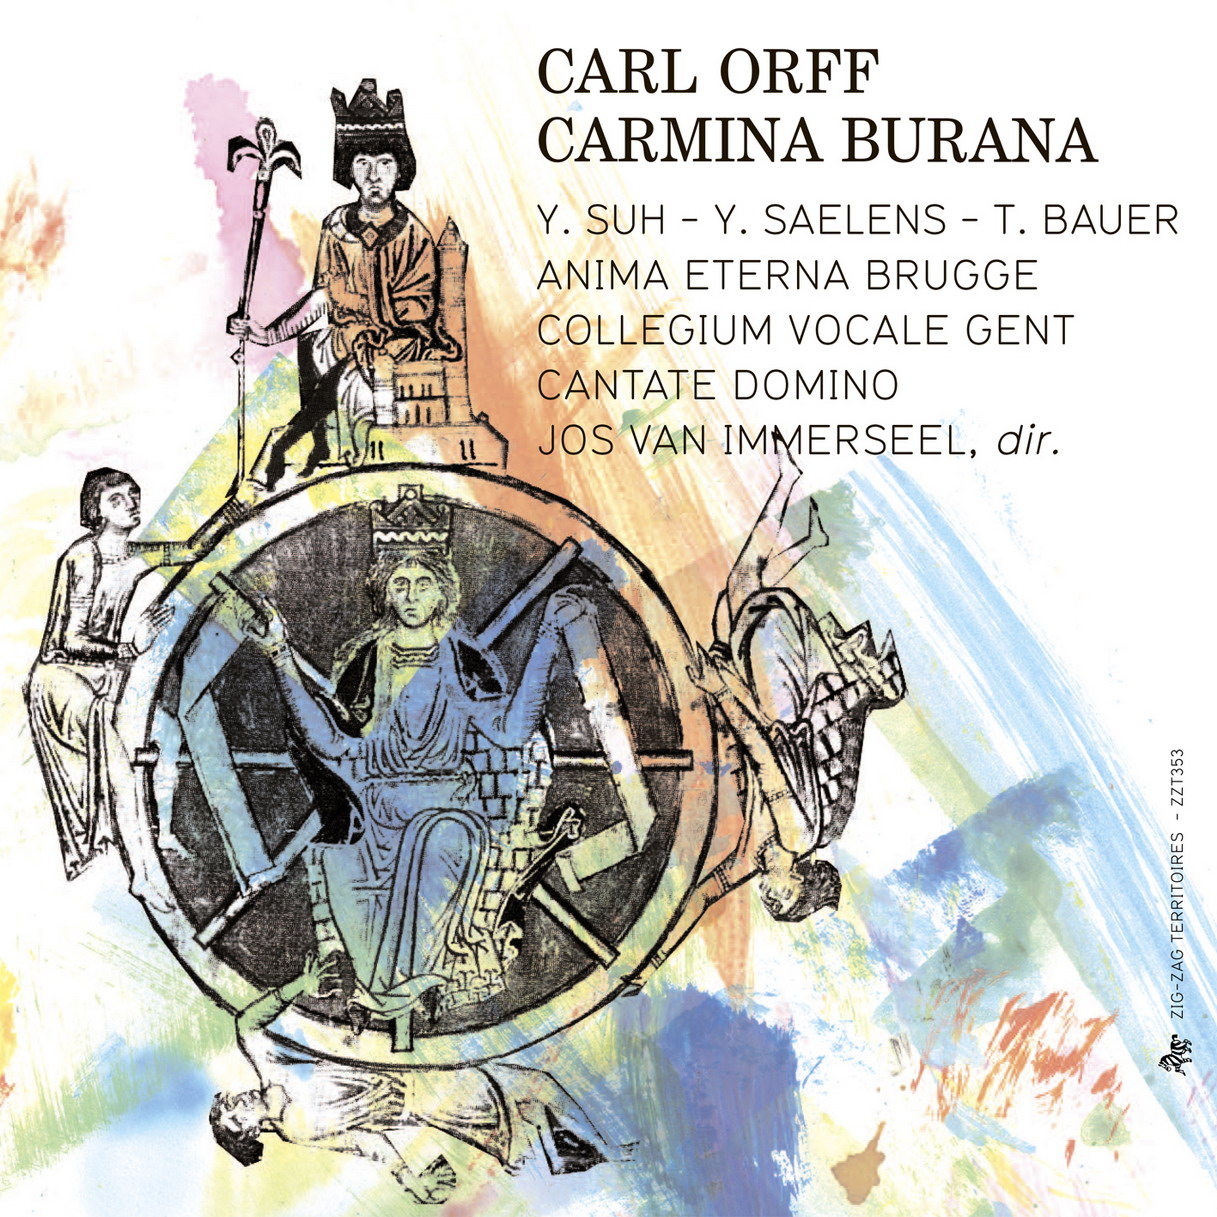 Carl Orff - Carmina Burana - Anima Eterna Brugge, Collegium Vocale Gent, Jos van Immerseel (2014) [Qobuz FLAC 24bit/96kHz]